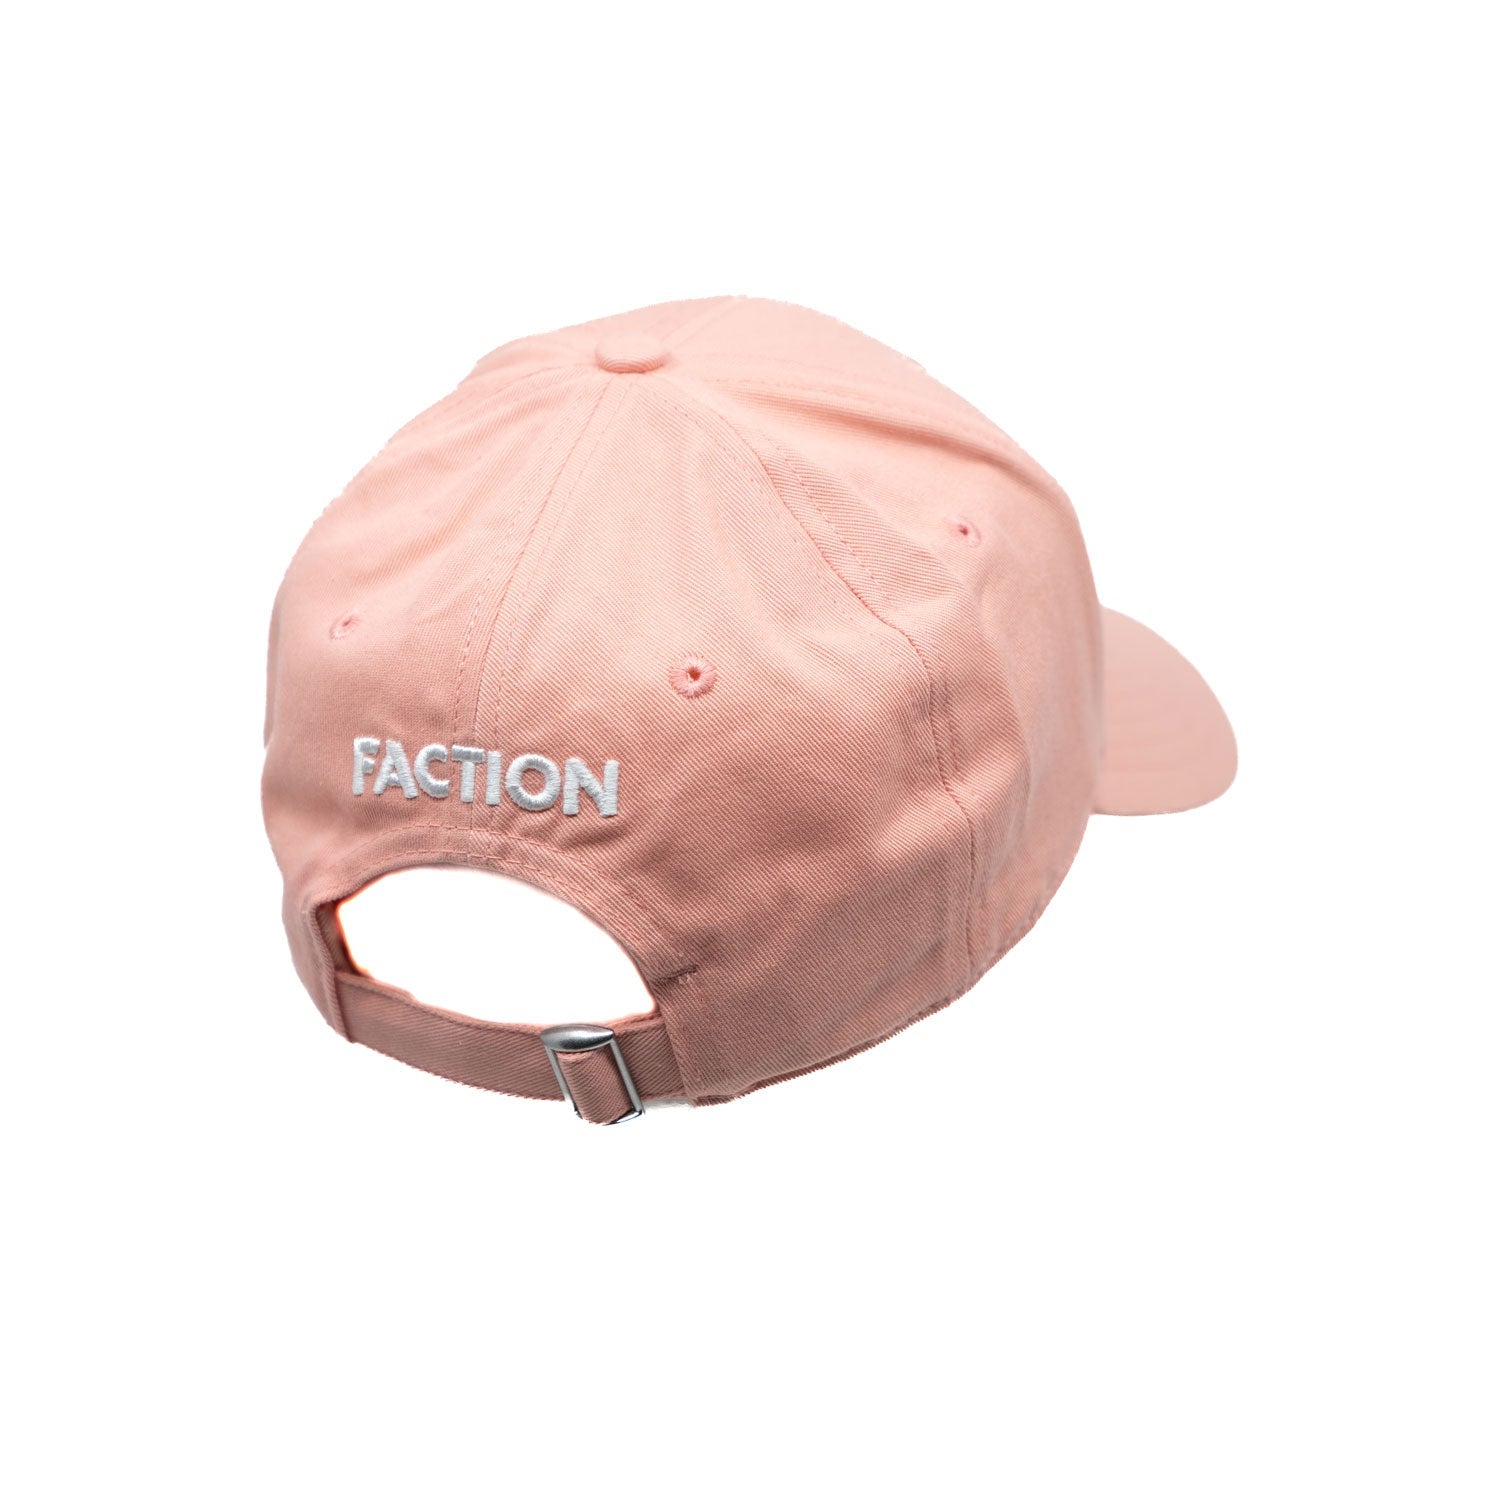 Faction Dad Hat Pink front